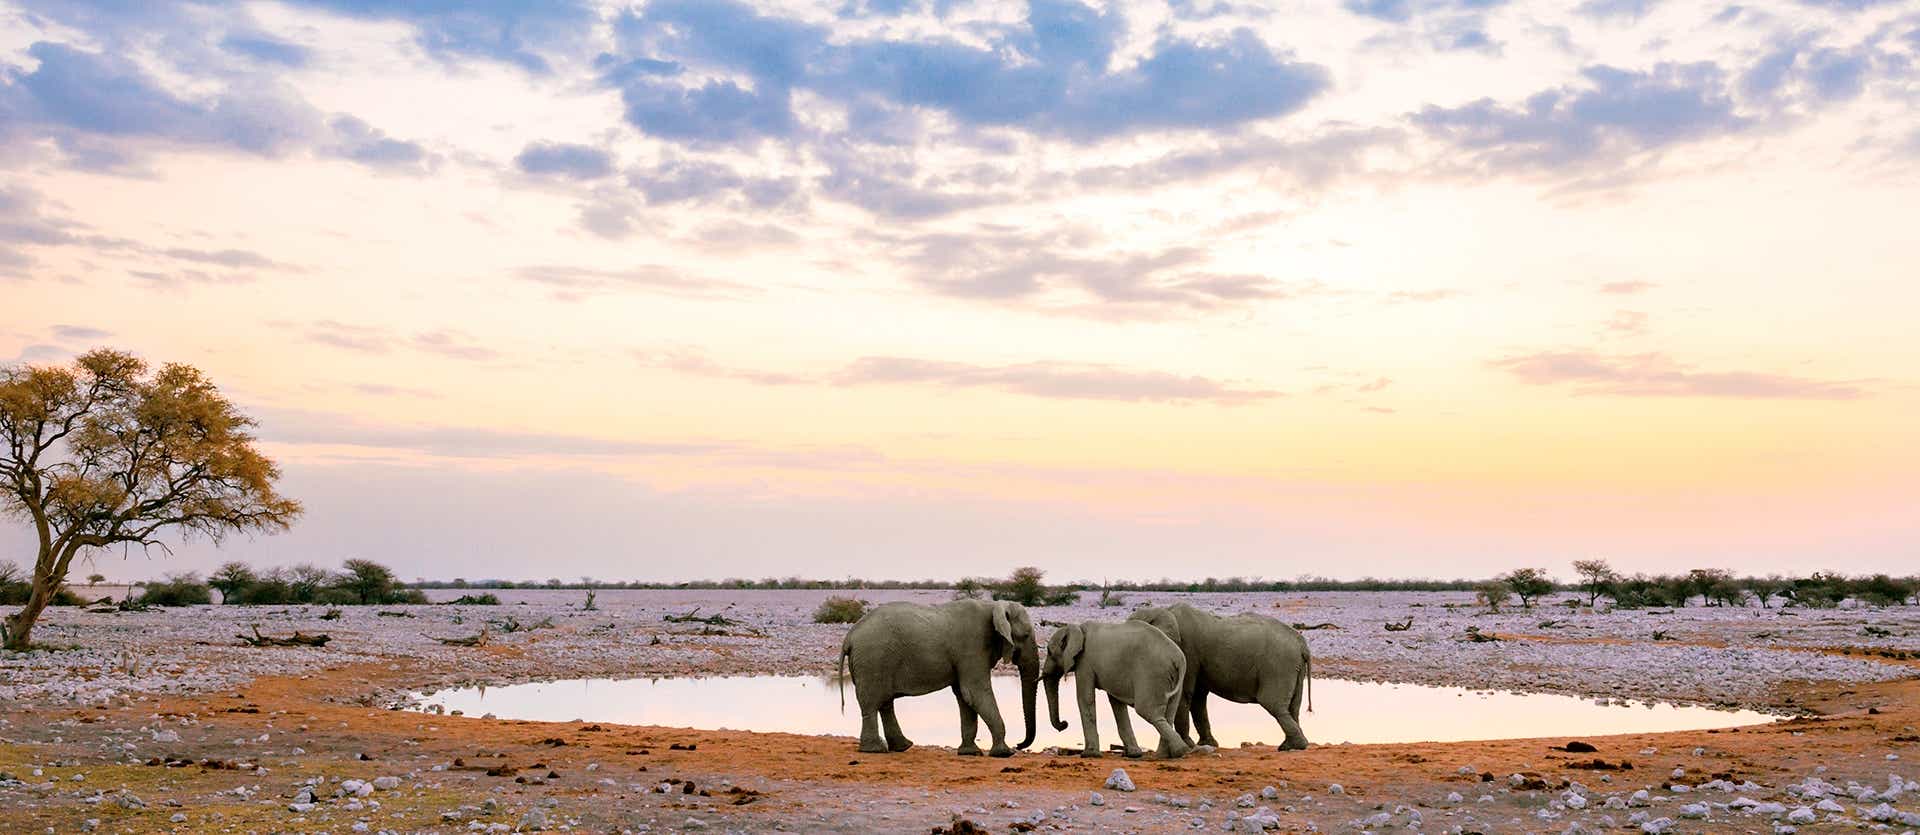 Manada de elefantes <span class="iconos separador"></span> Parque Nacional Etosha <span class="iconos separador"></span> Namibia